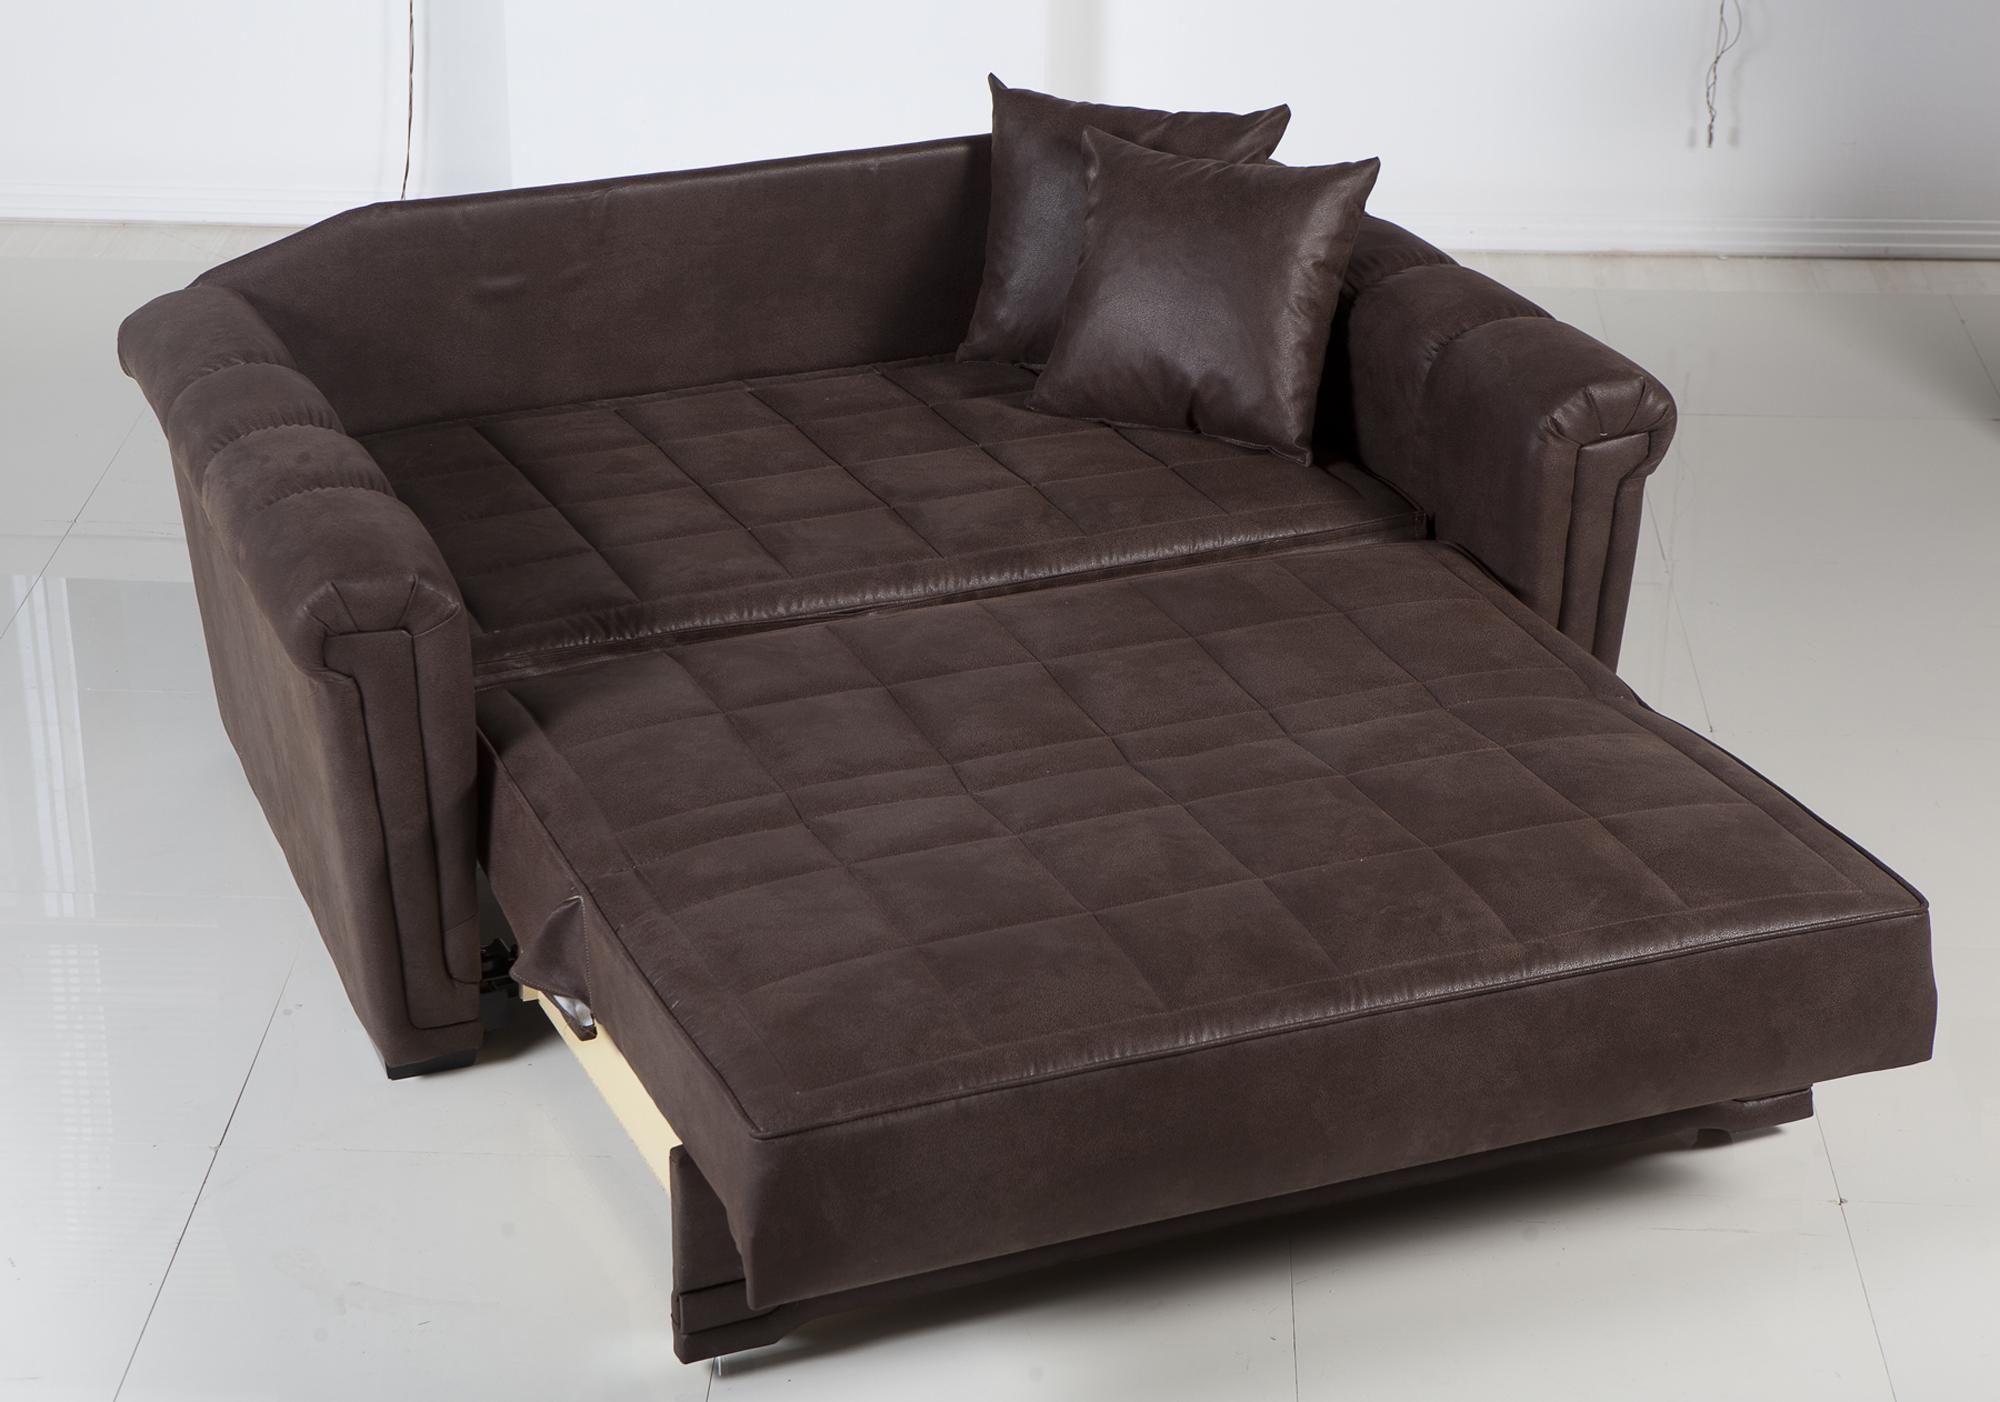 Loveseat Sleeper Sofa :mypire Throughout Sleeper Sofa Sheets (View 19 of 20)